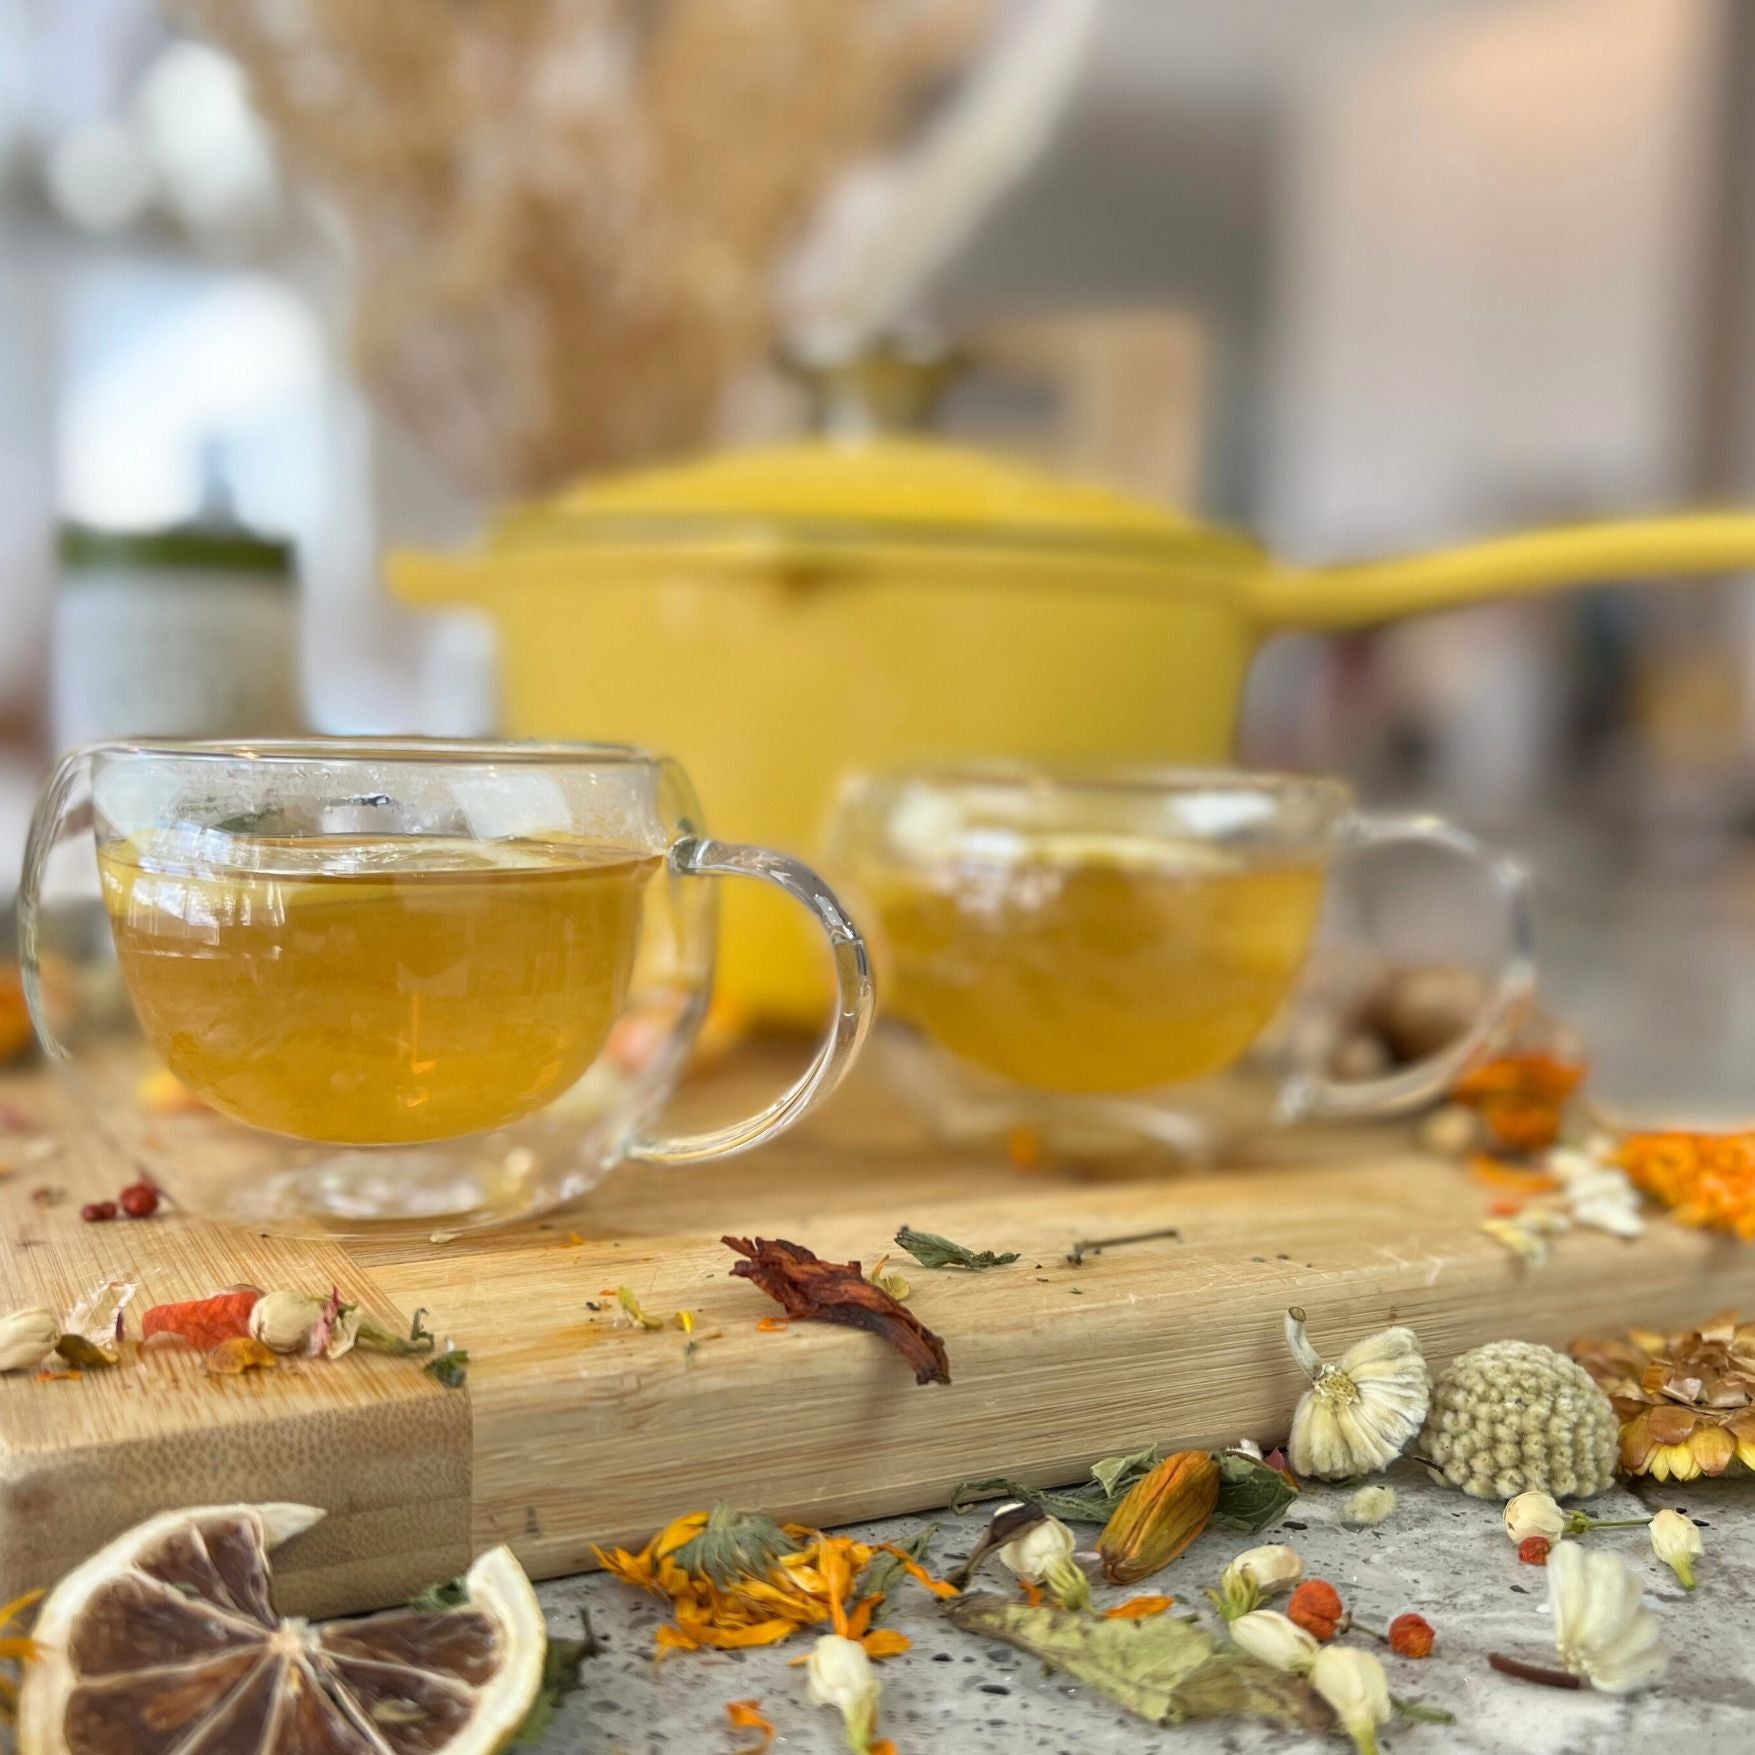 Warm Honey Green Tea in front of Limoncello yellow Saucepan